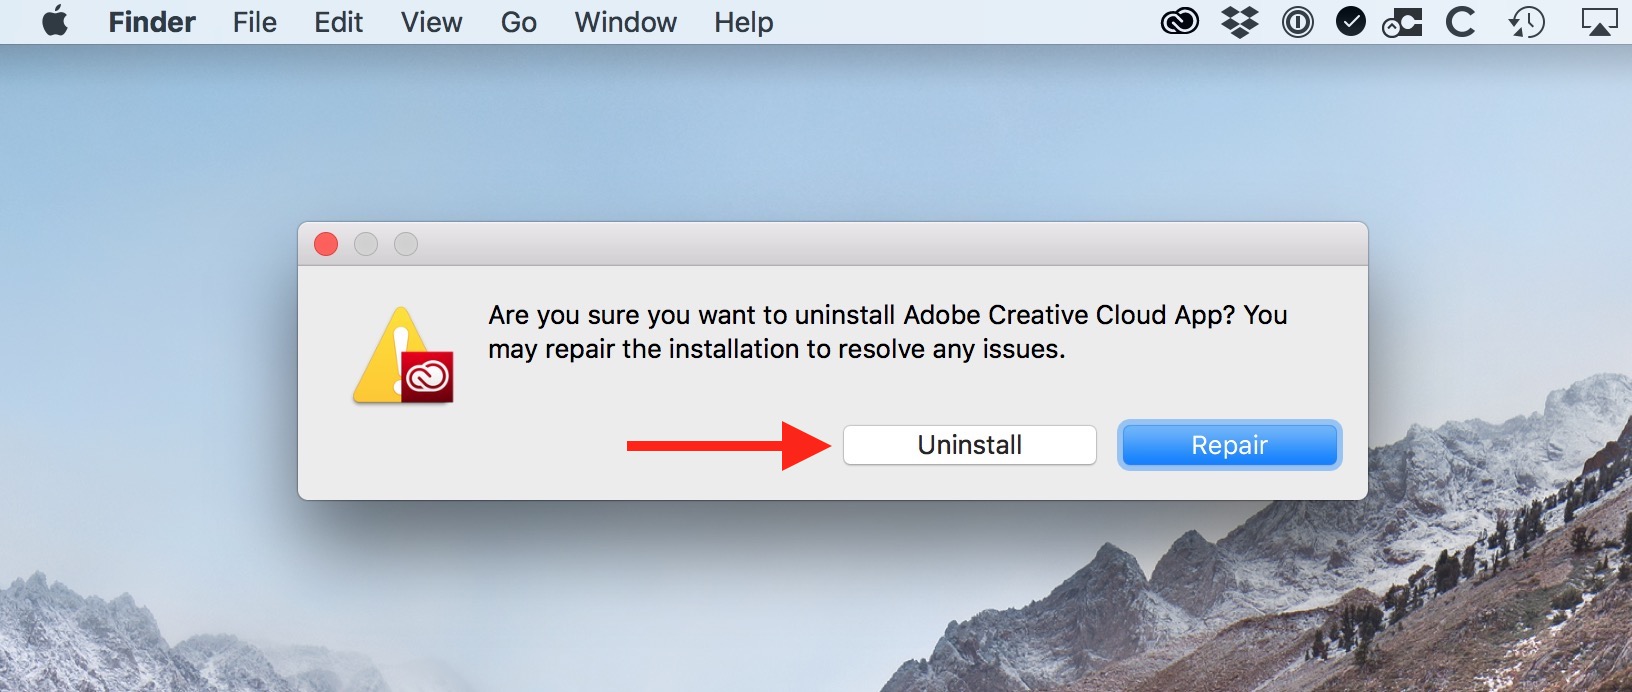 creative cloud app cleaner mac